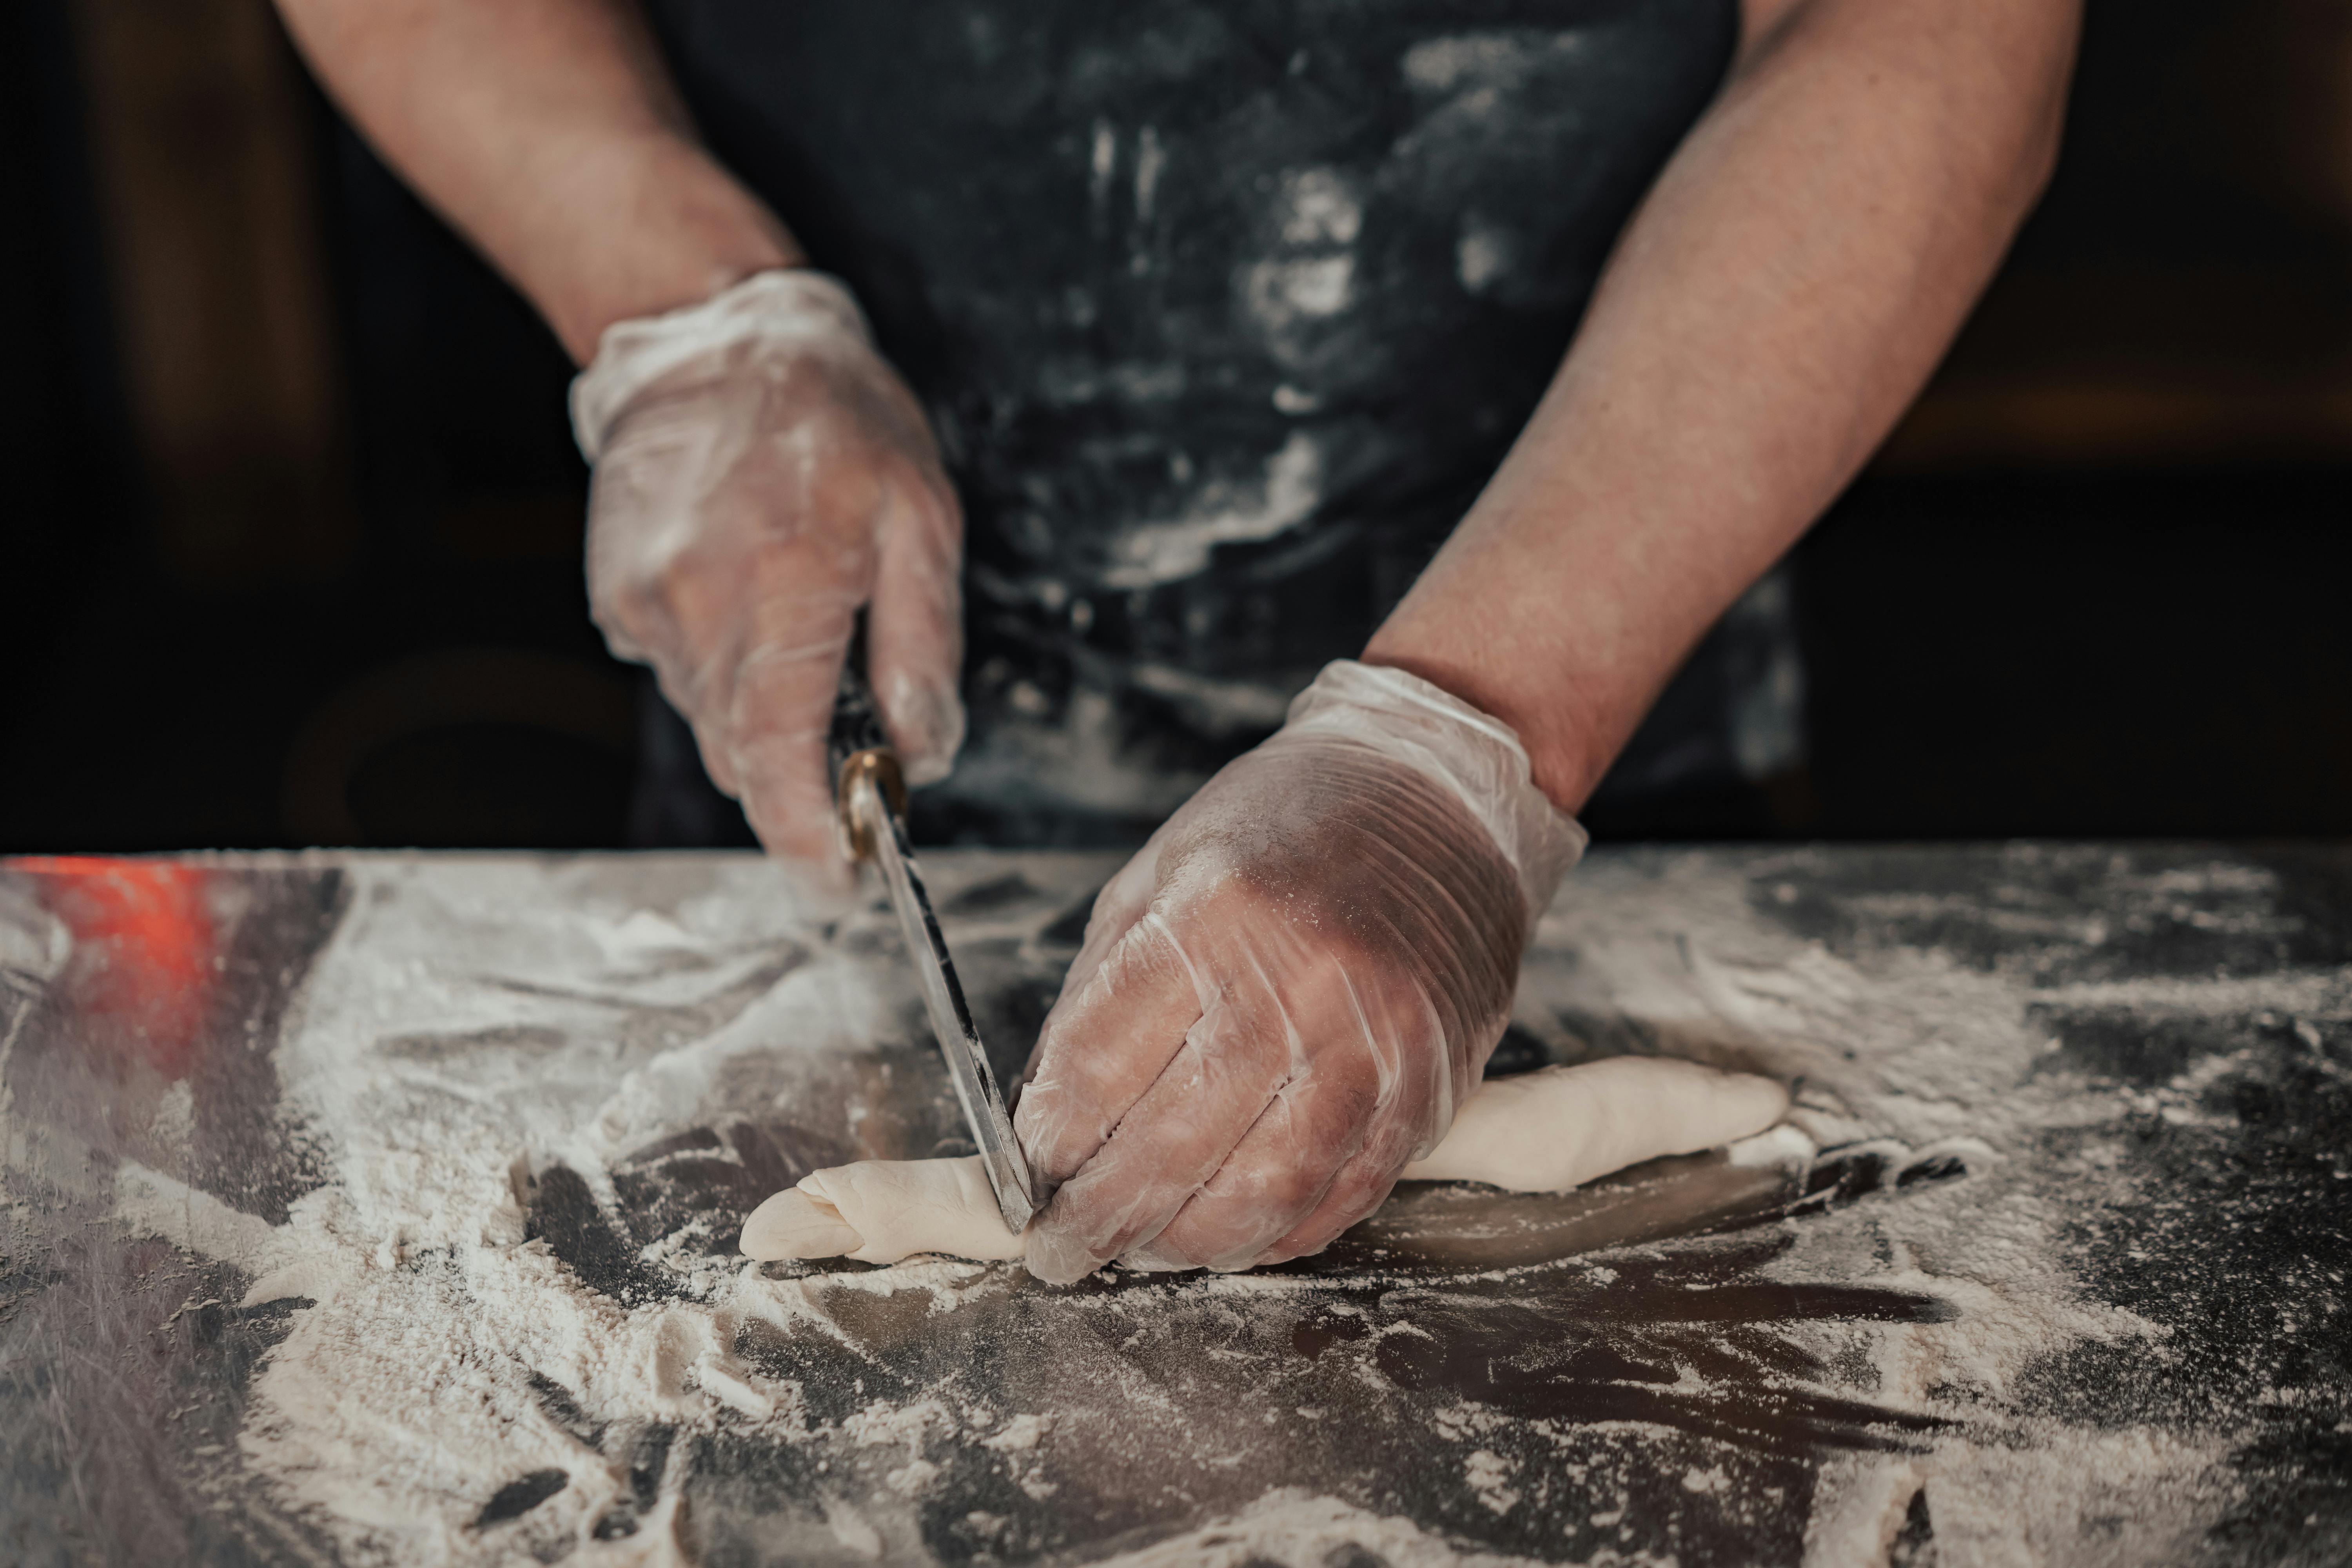 a person cutting dough